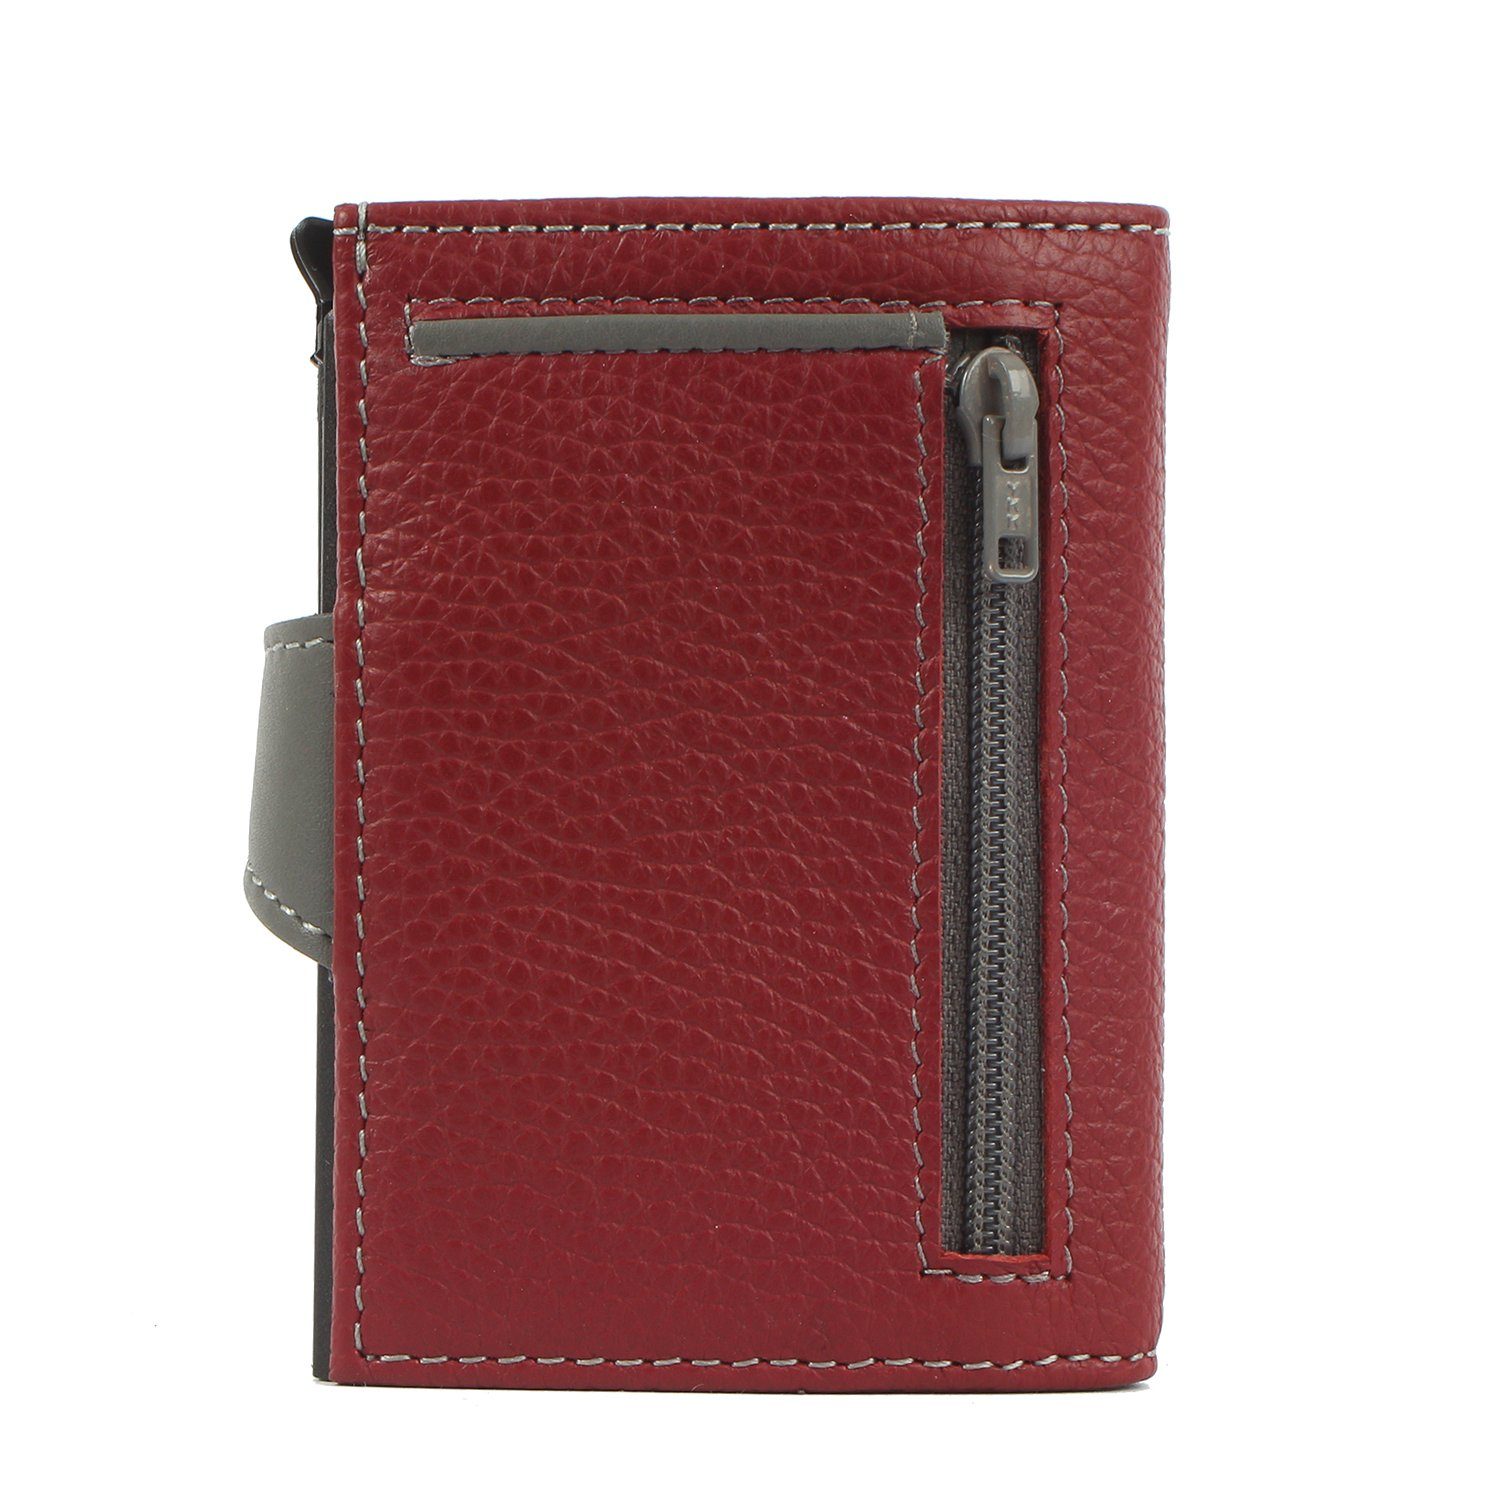 Margelisch Mini Geldbörse noonyu karminrot leather, RFID aus Kreditkartenbörse double Upcycling Leder